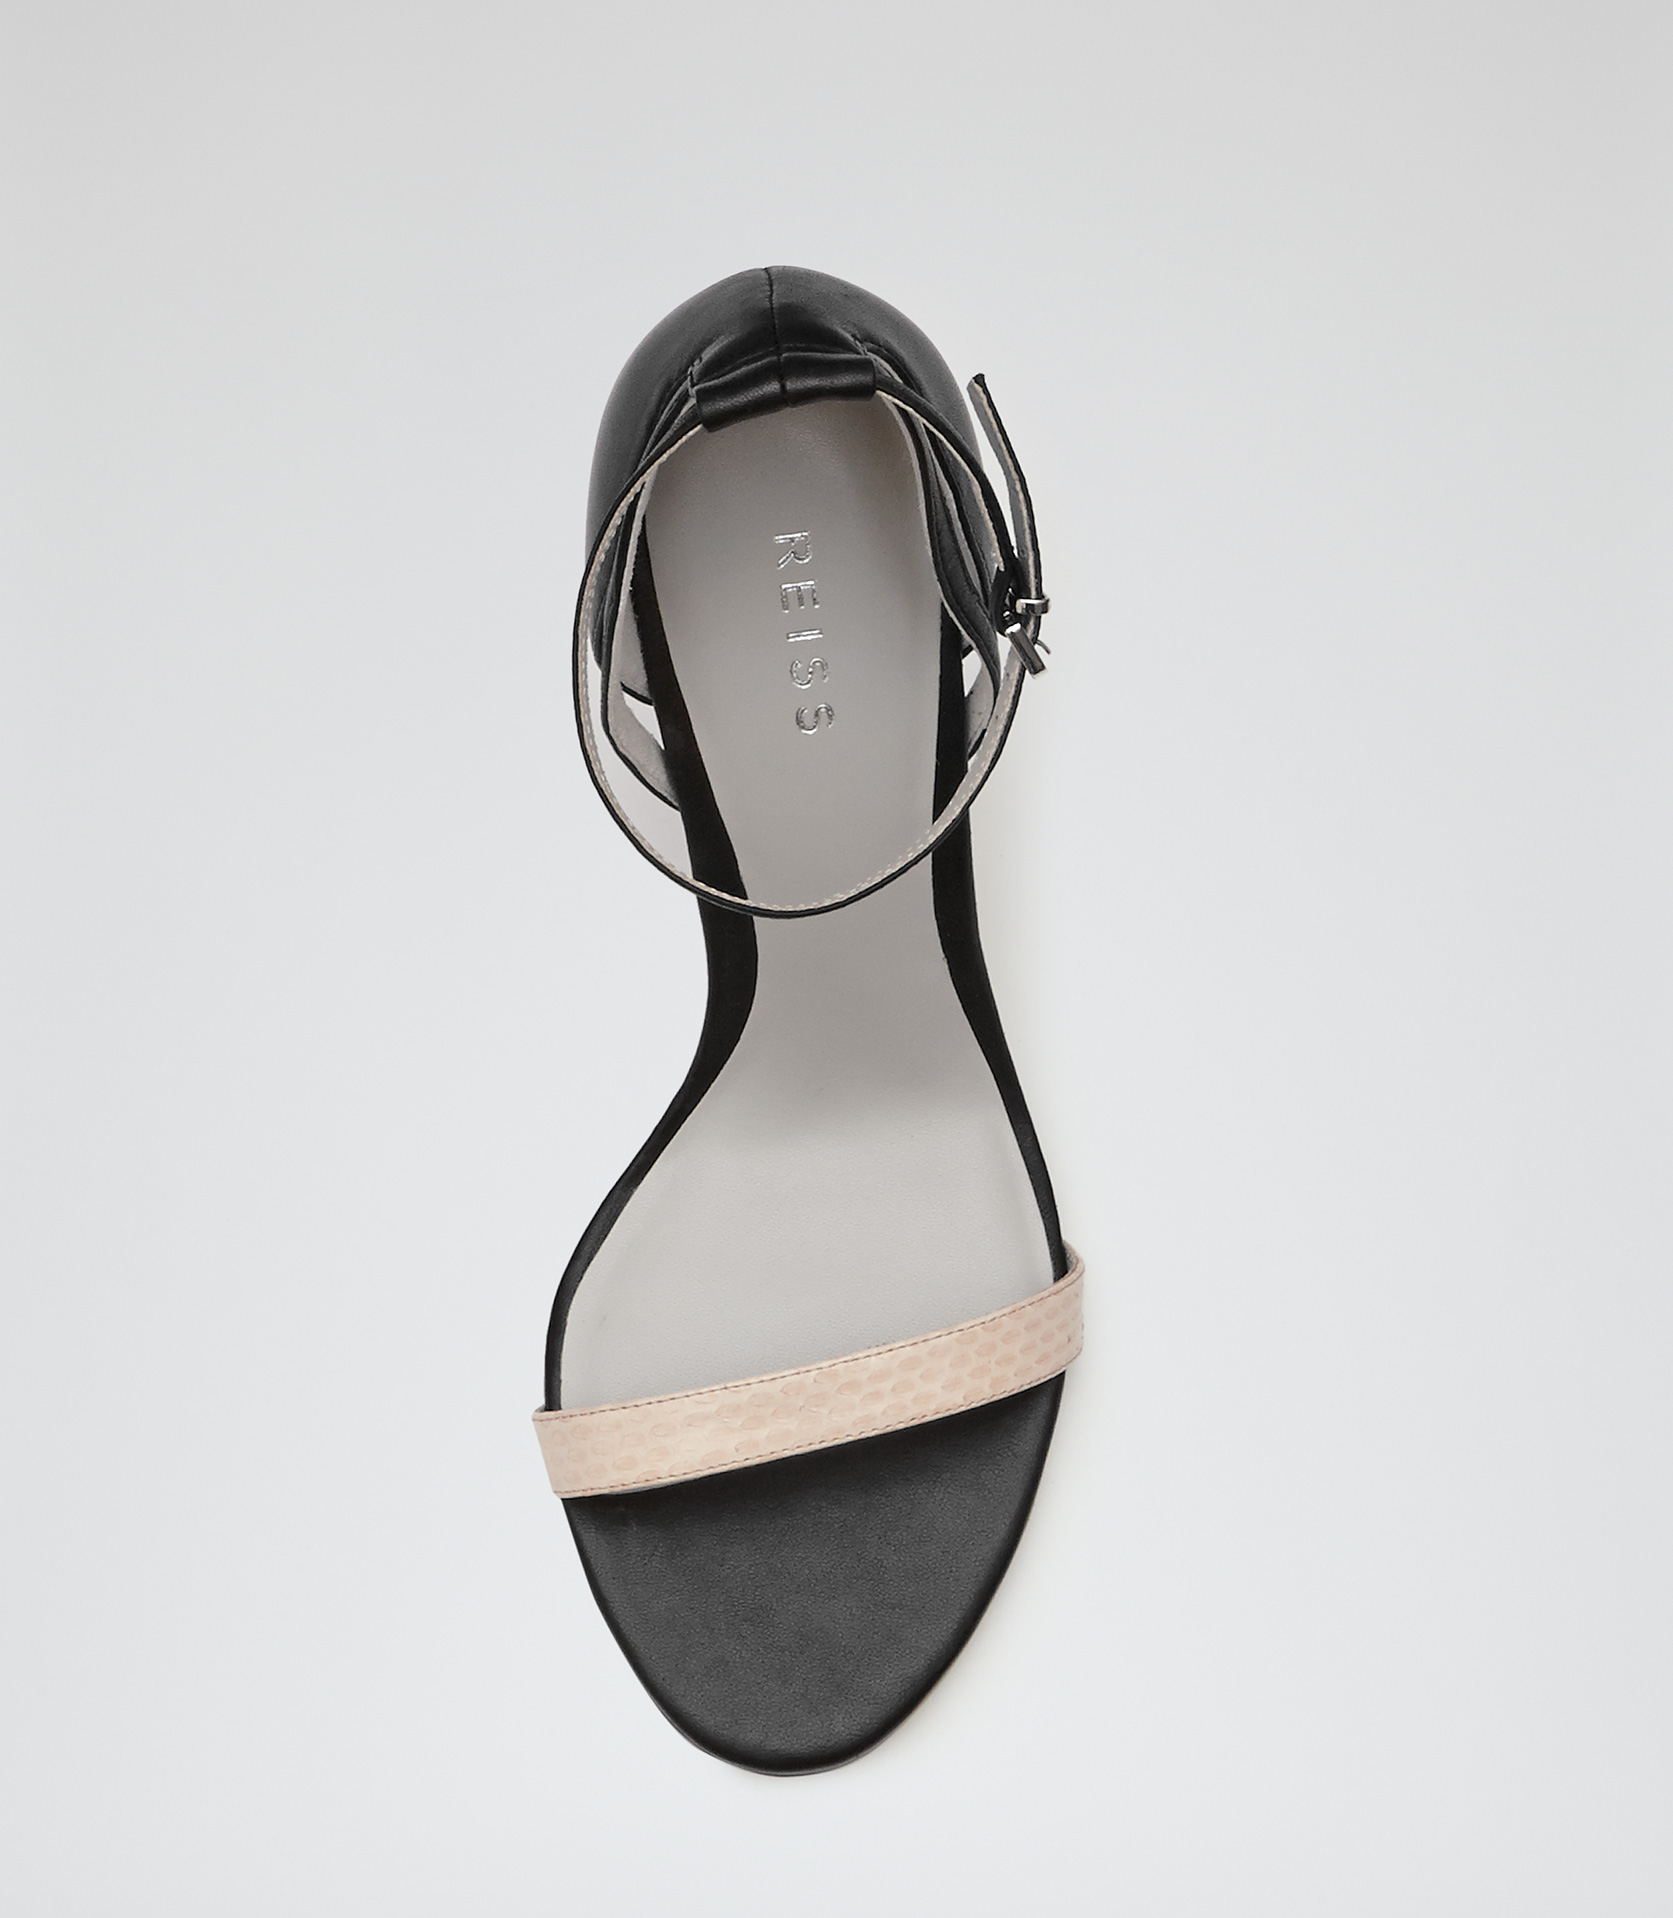 Lyst - Reiss Malva Single Strap Sandals in Black